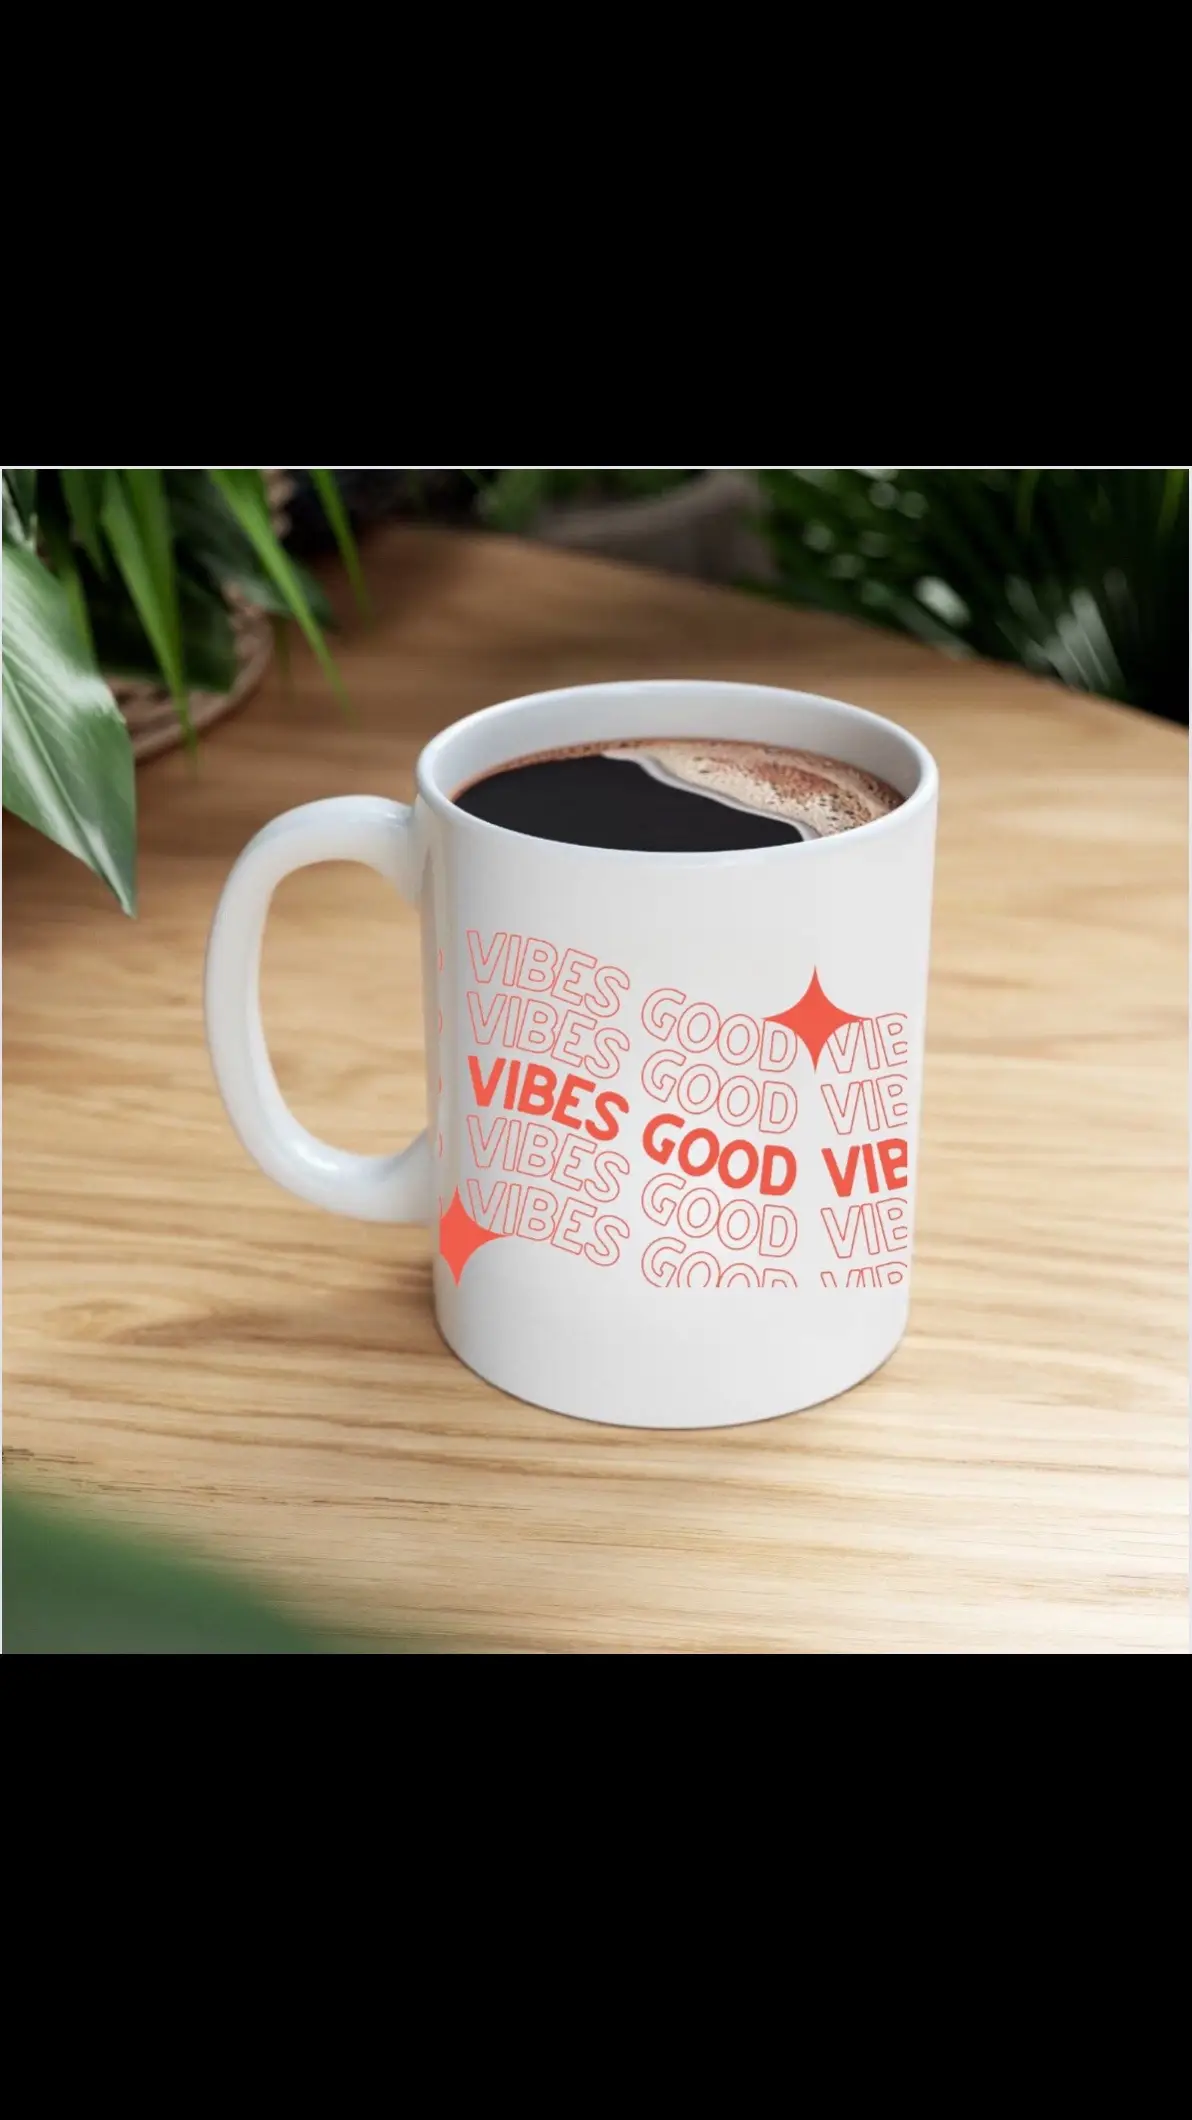 Get this cermaic mug for at https://printedperfection12.myshopify.com/products/ceramic-mug-11oz-15oz with a discount using code ARIA101 #printify #shopifystore #fyppppppppppppppppppppppp 